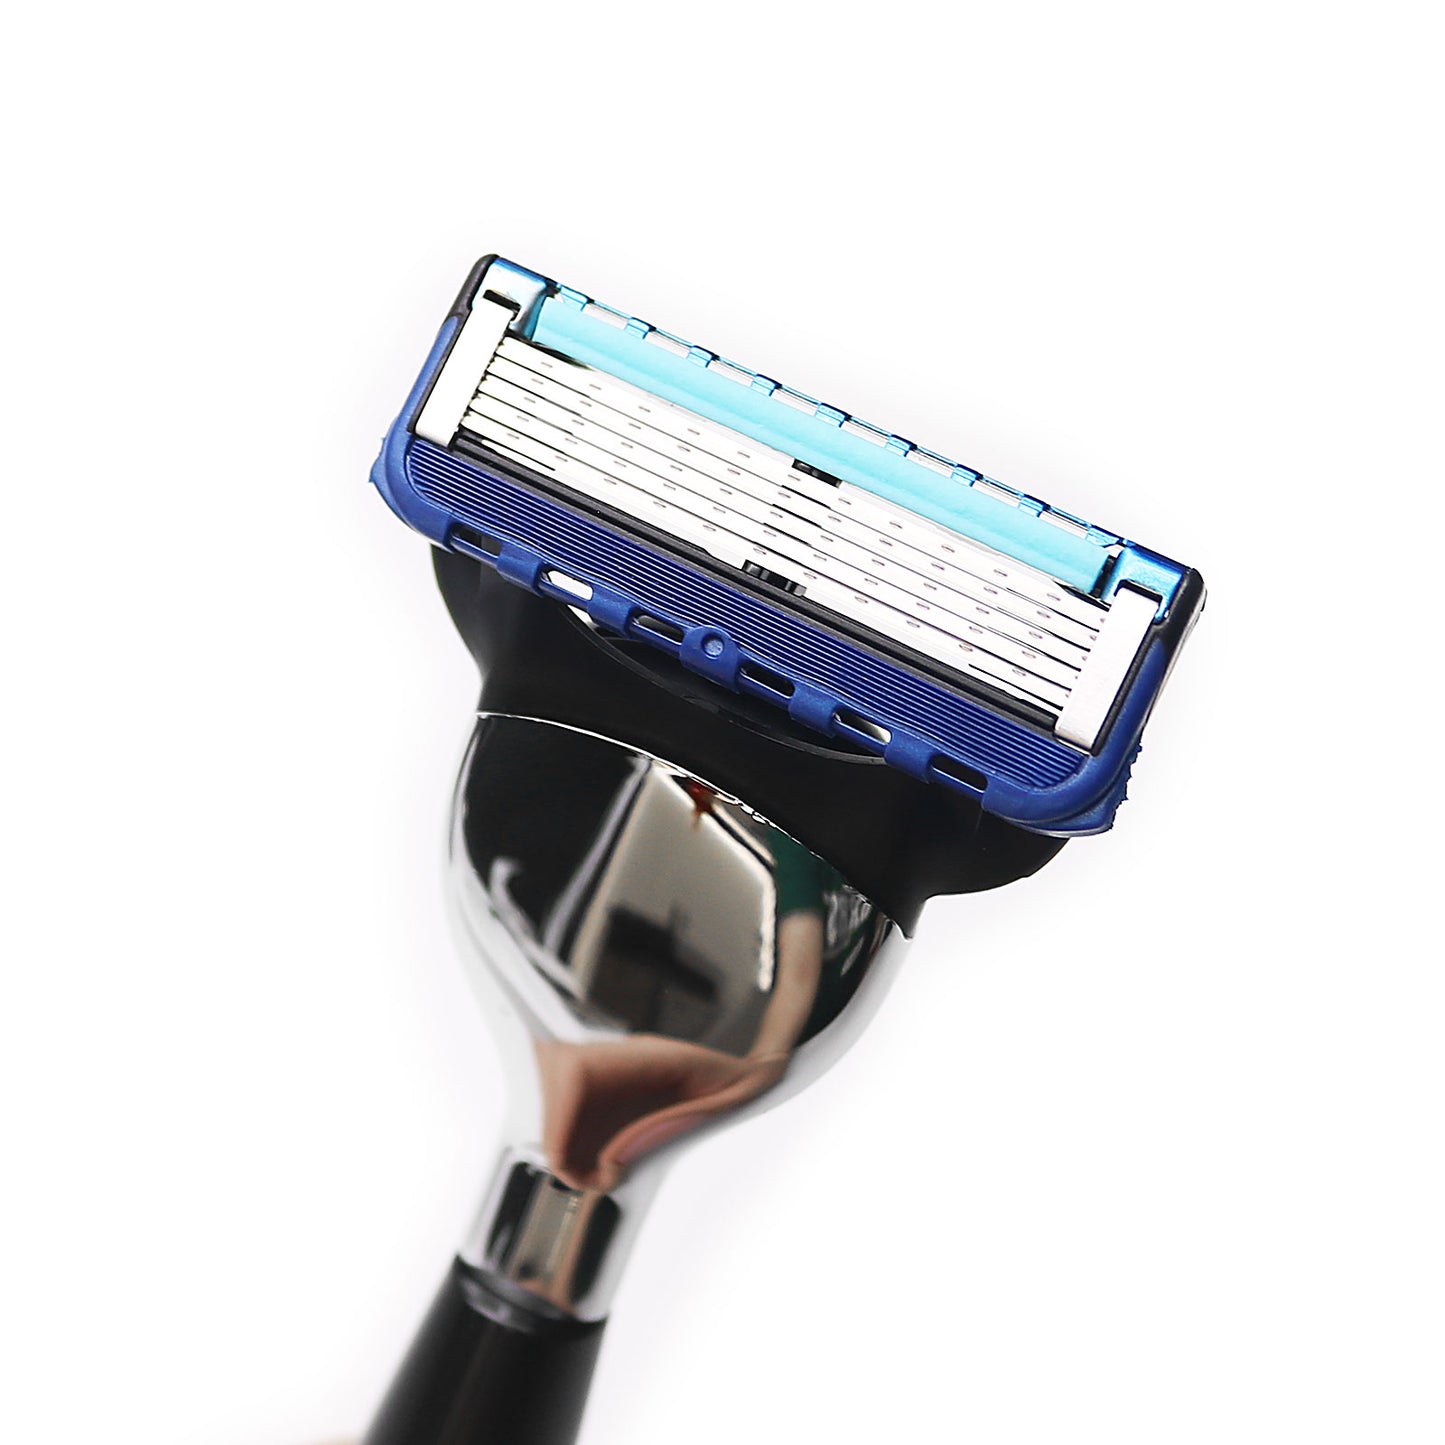 GG Shaving Set Kit with Shaving brush, Stand, Safety Razor and Shaving Bowl T15